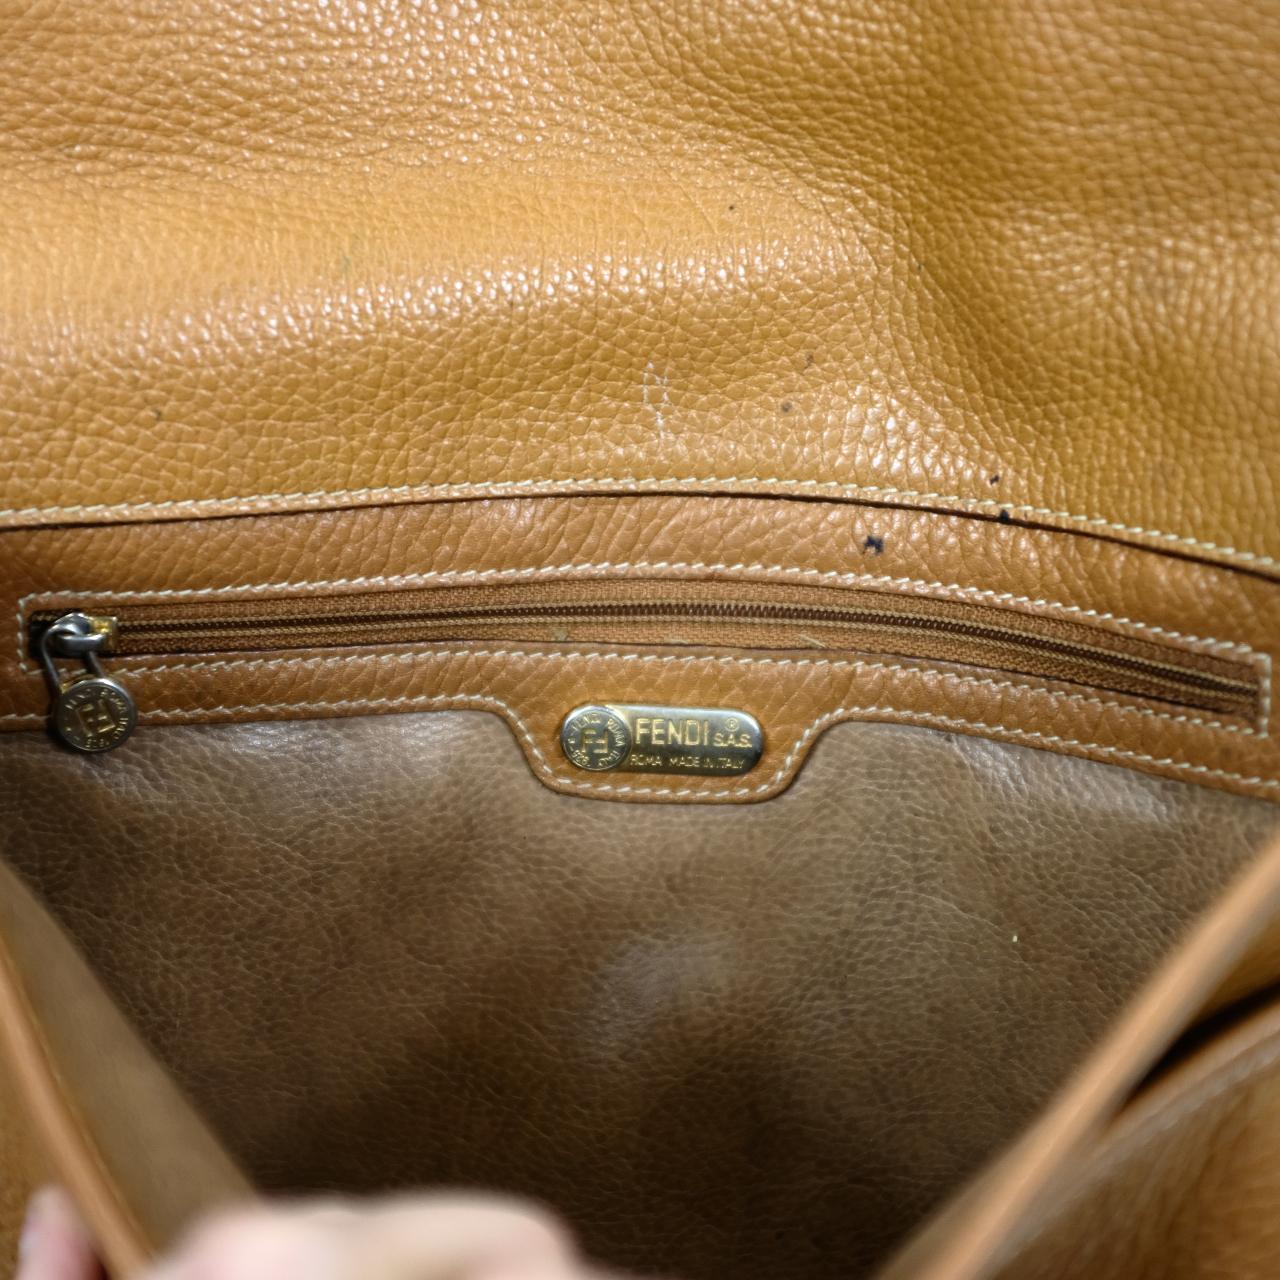 Fendi leather bag